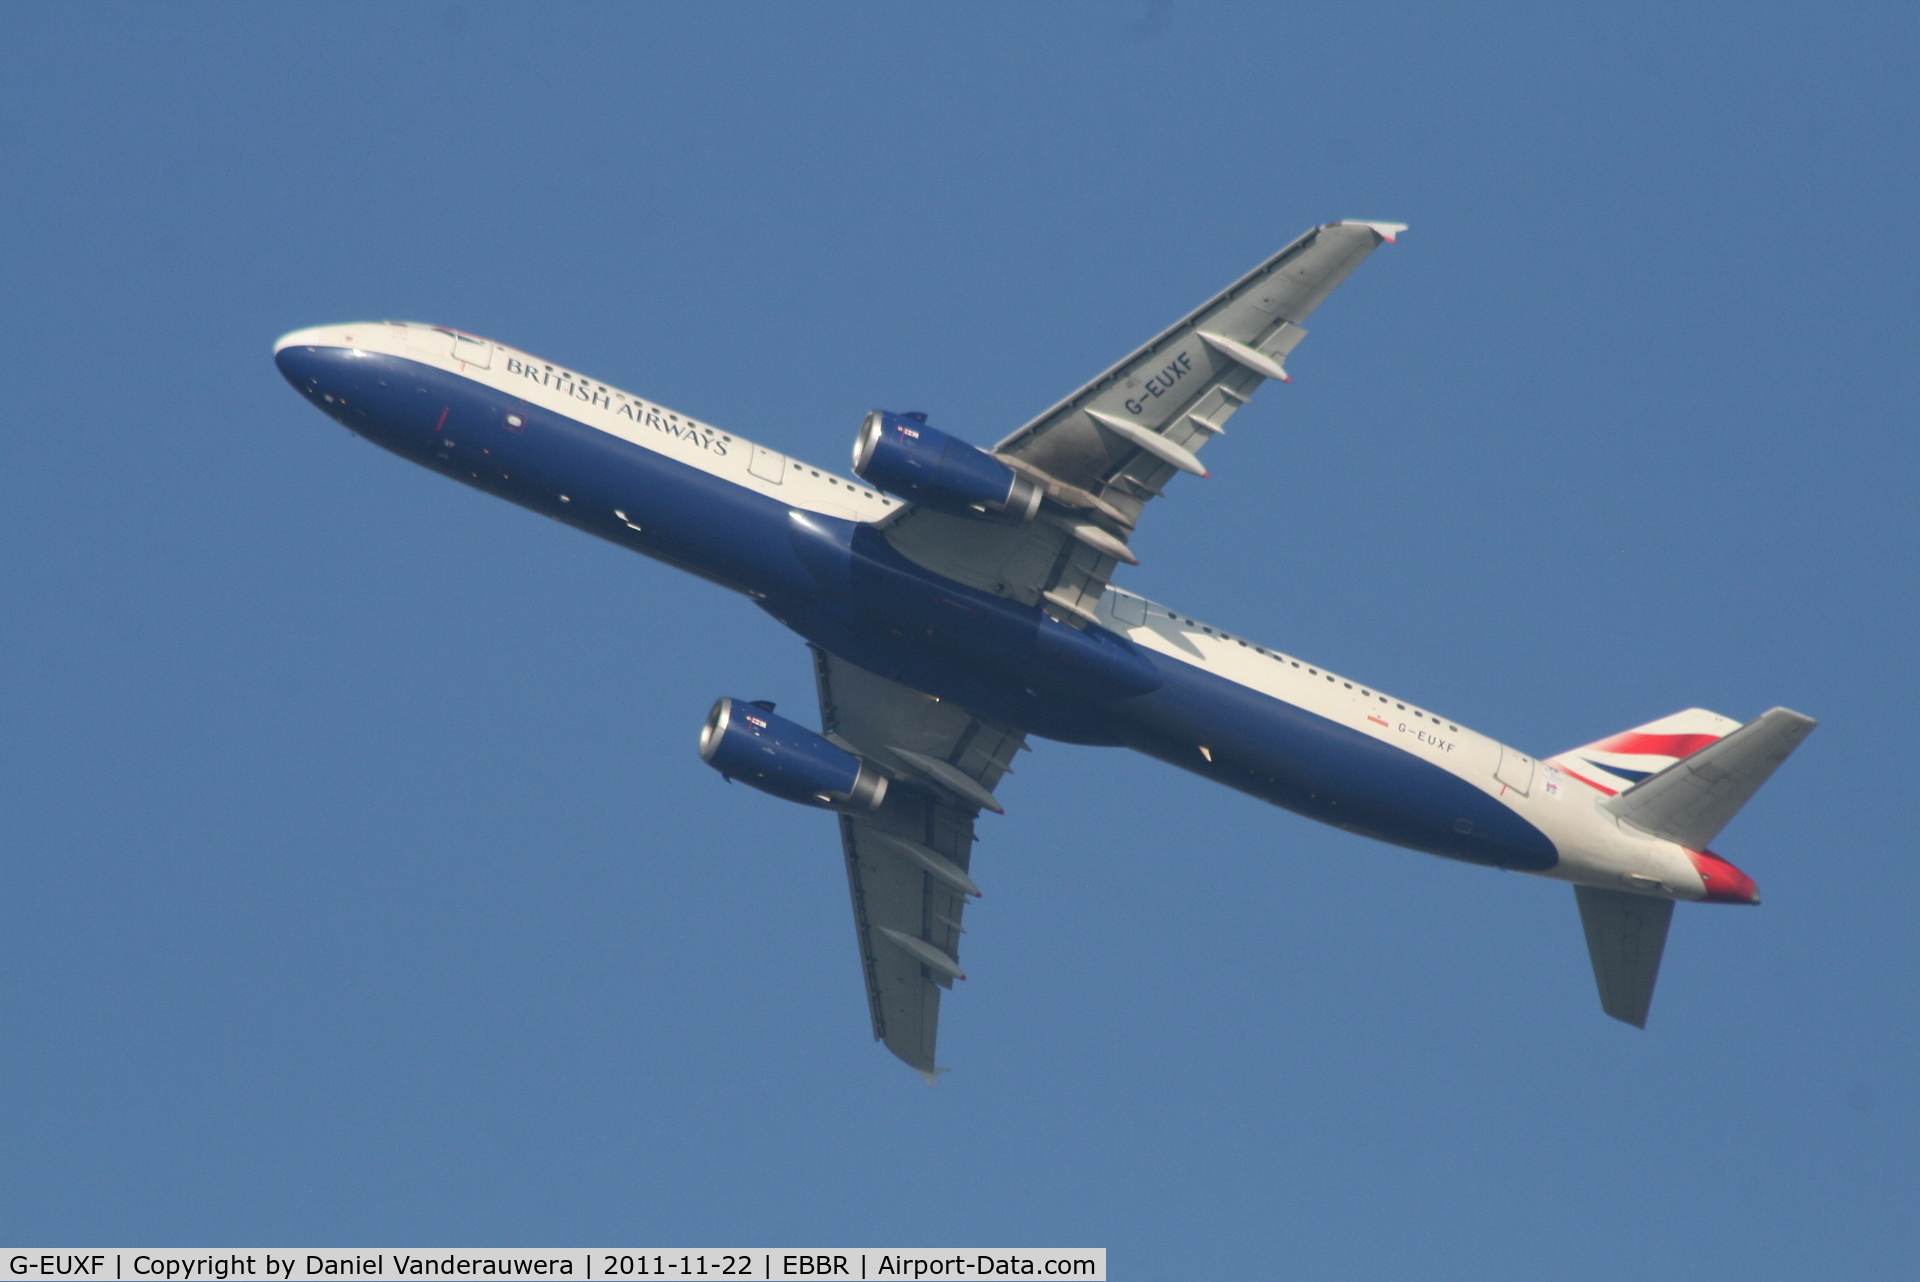 G-EUXF, 2004 Airbus A321-231 C/N 2324, Flight BA393 is climbing from RWY 25R